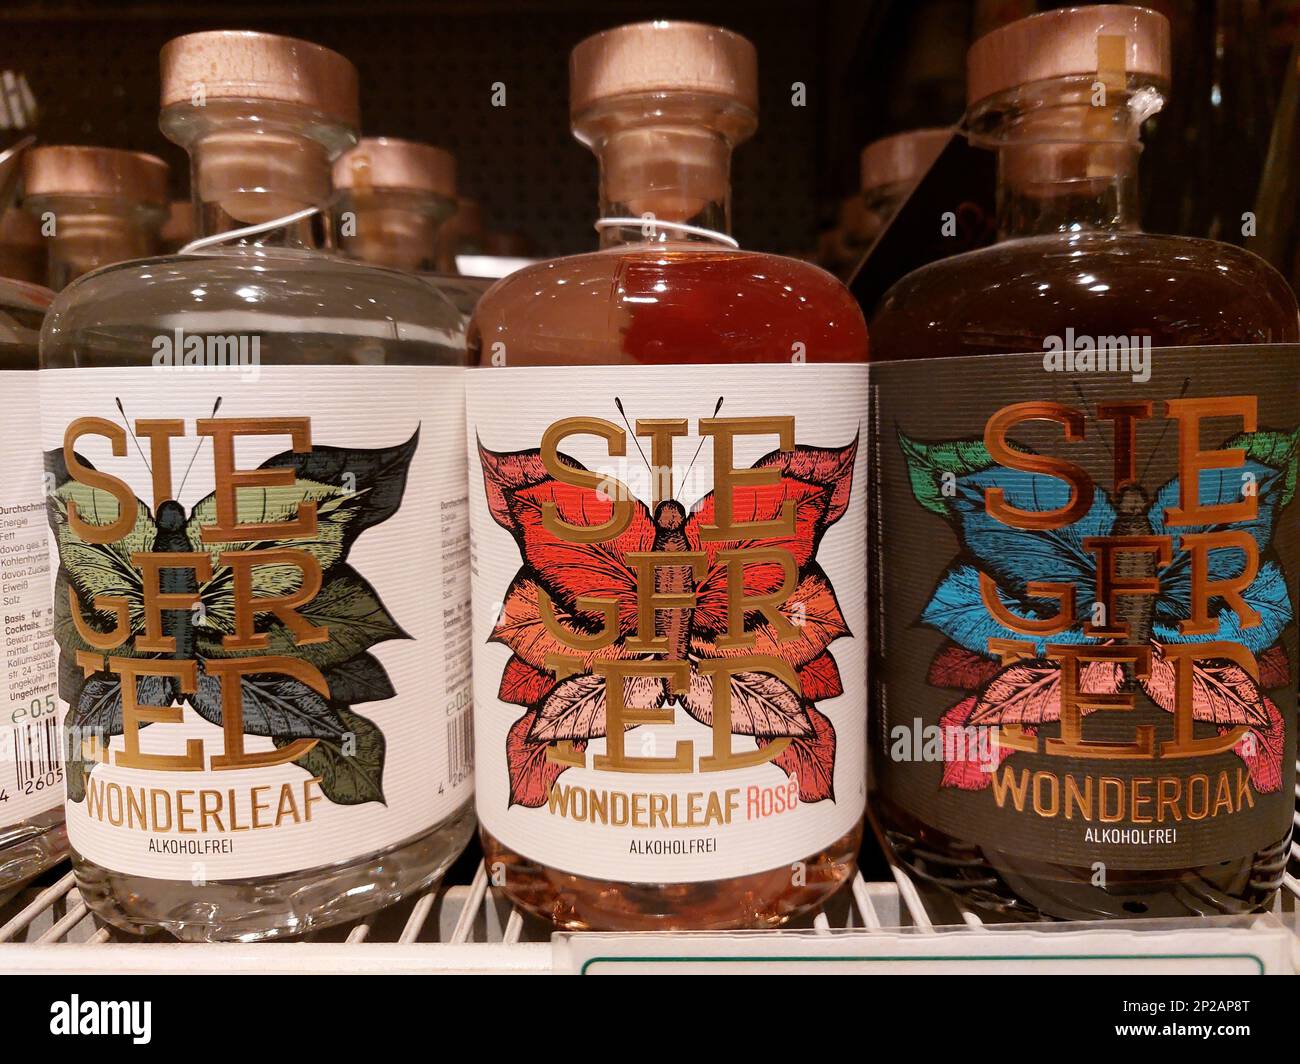 choice of alcohol free Wonderleaf and Wonderoak bottles by Siegfried in a  supermarket Stock Photo - Alamy